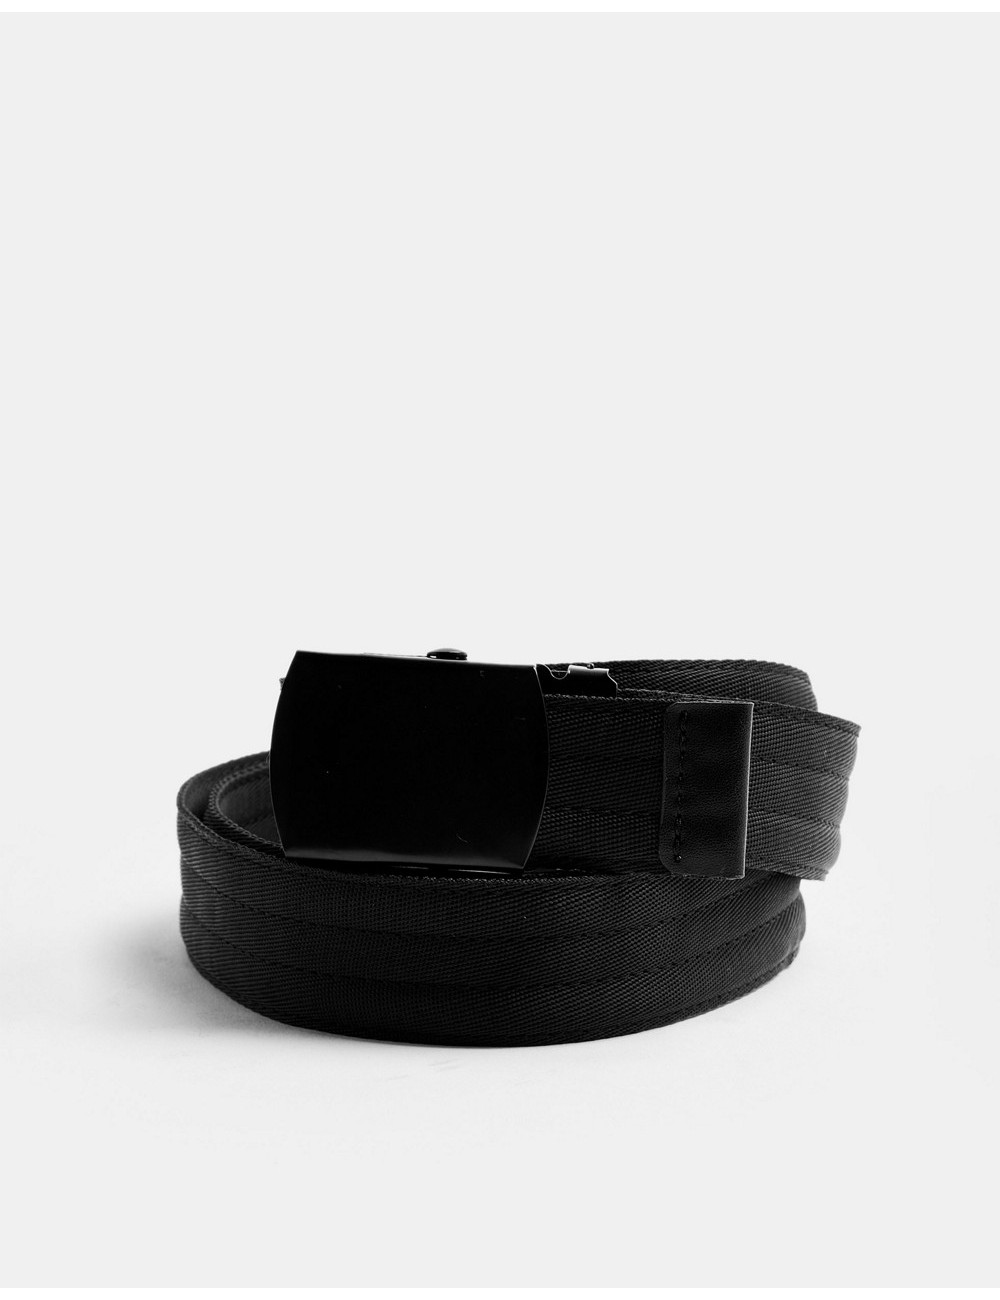 Topshop buckle belt in black